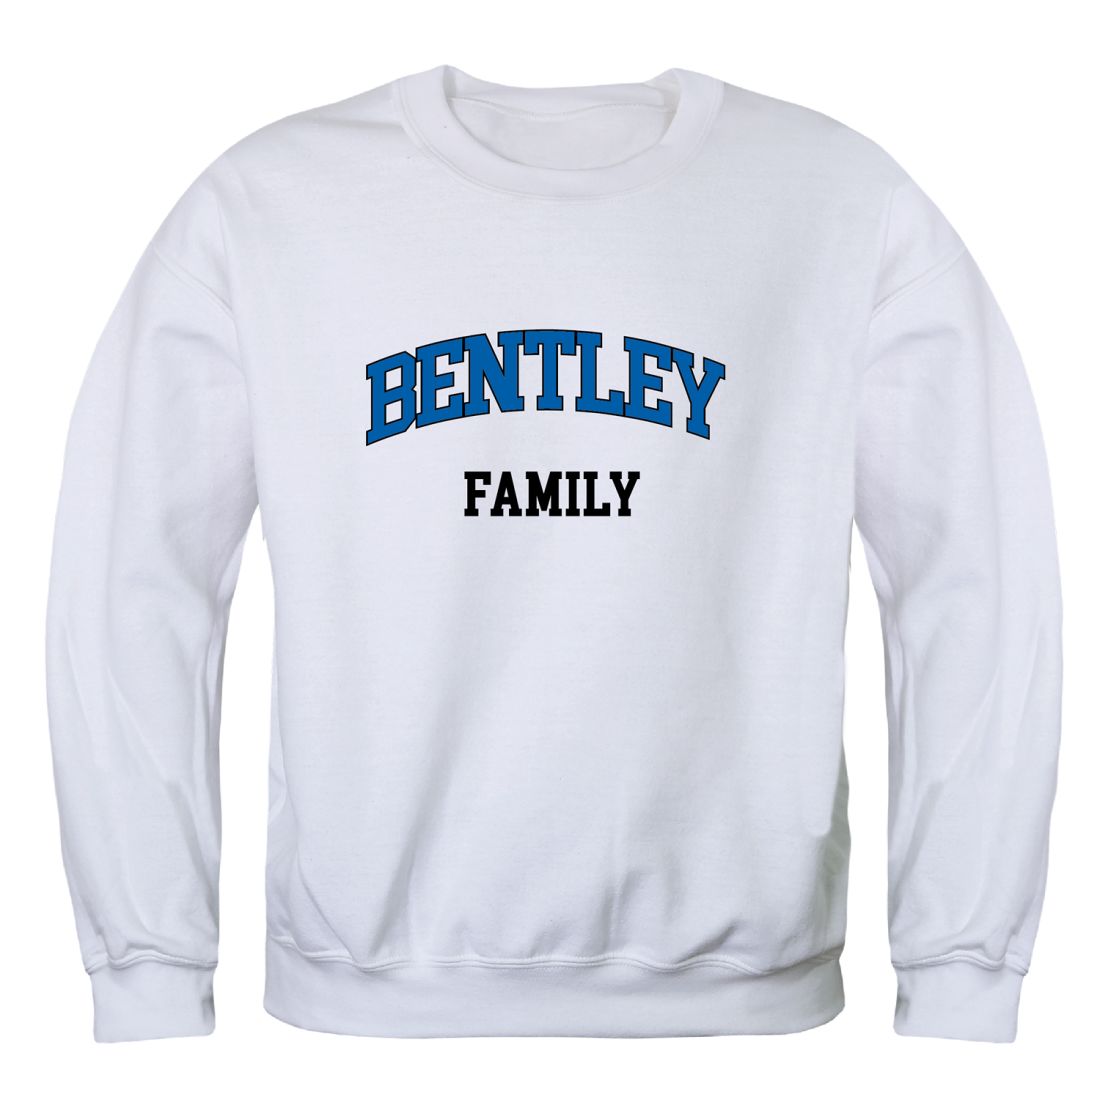 Bentley-University-Falcons-Family-Fleece-Crewneck-Pullover-Sweatshirt